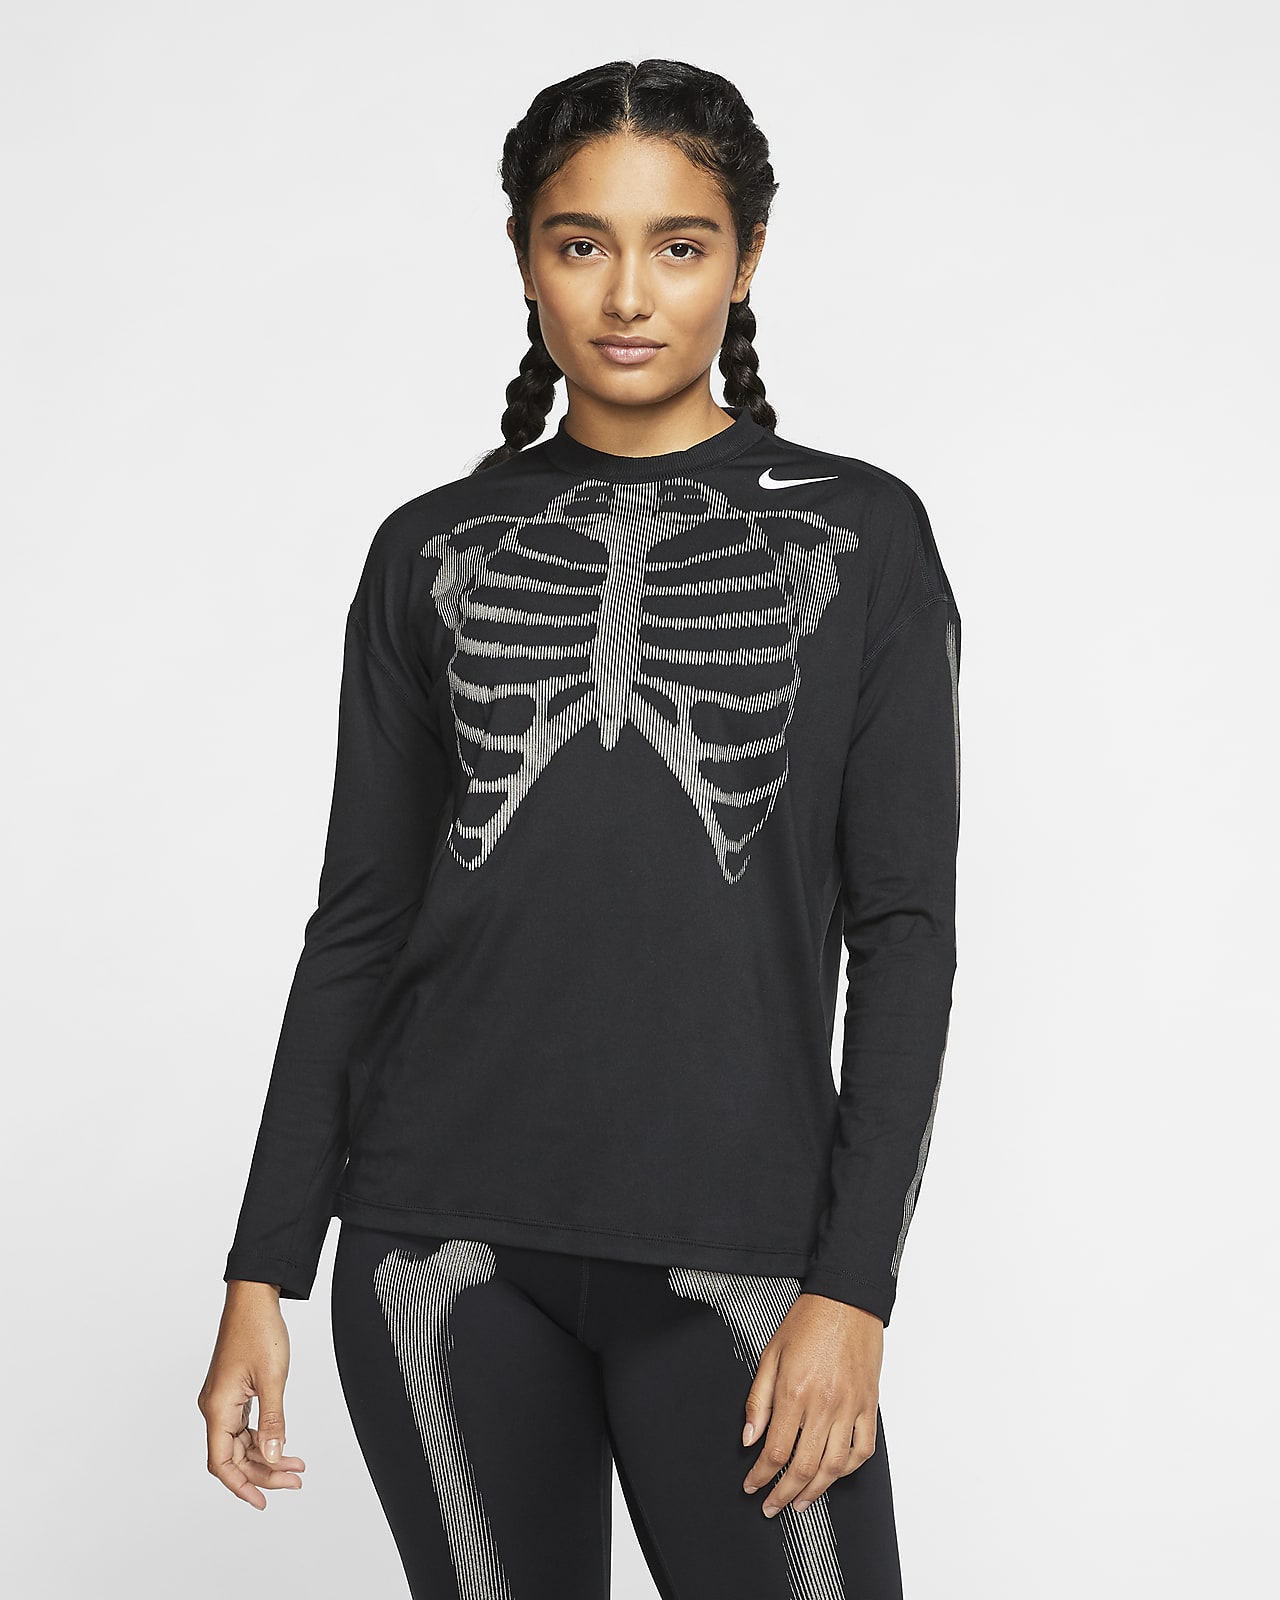 Nike Skeleton Leggings in Black